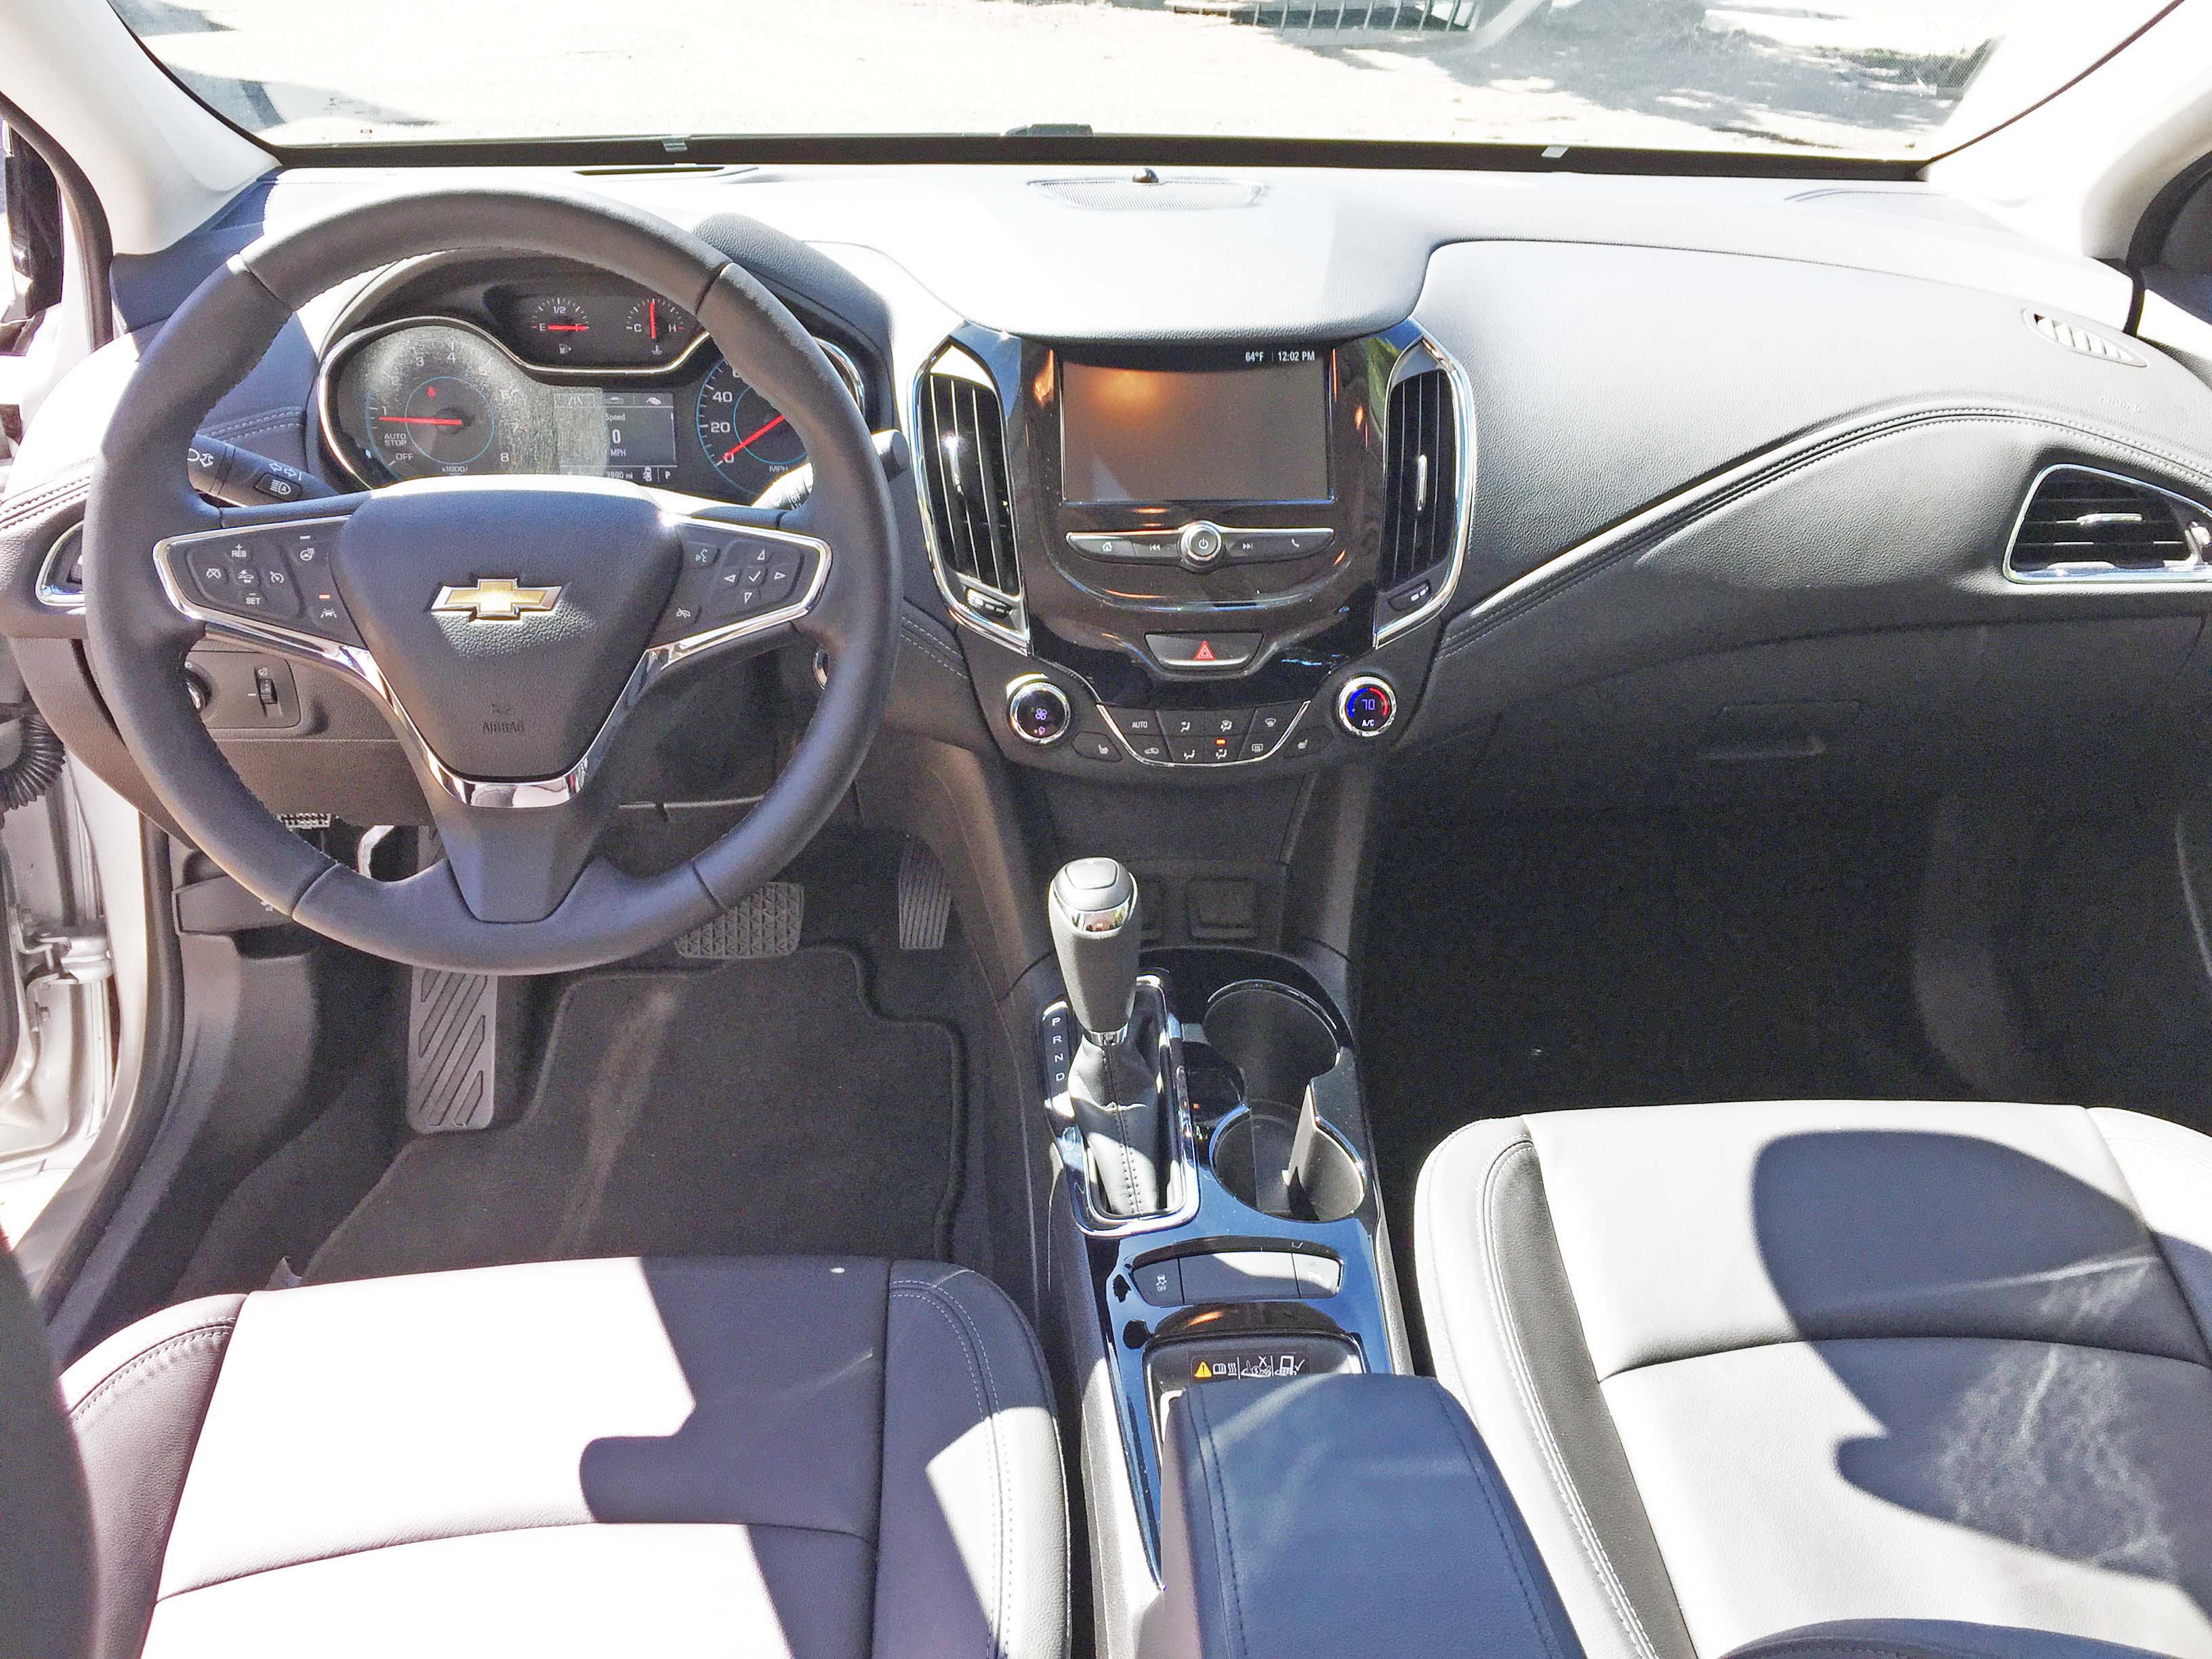 Chevrolet Cruze interior restyling